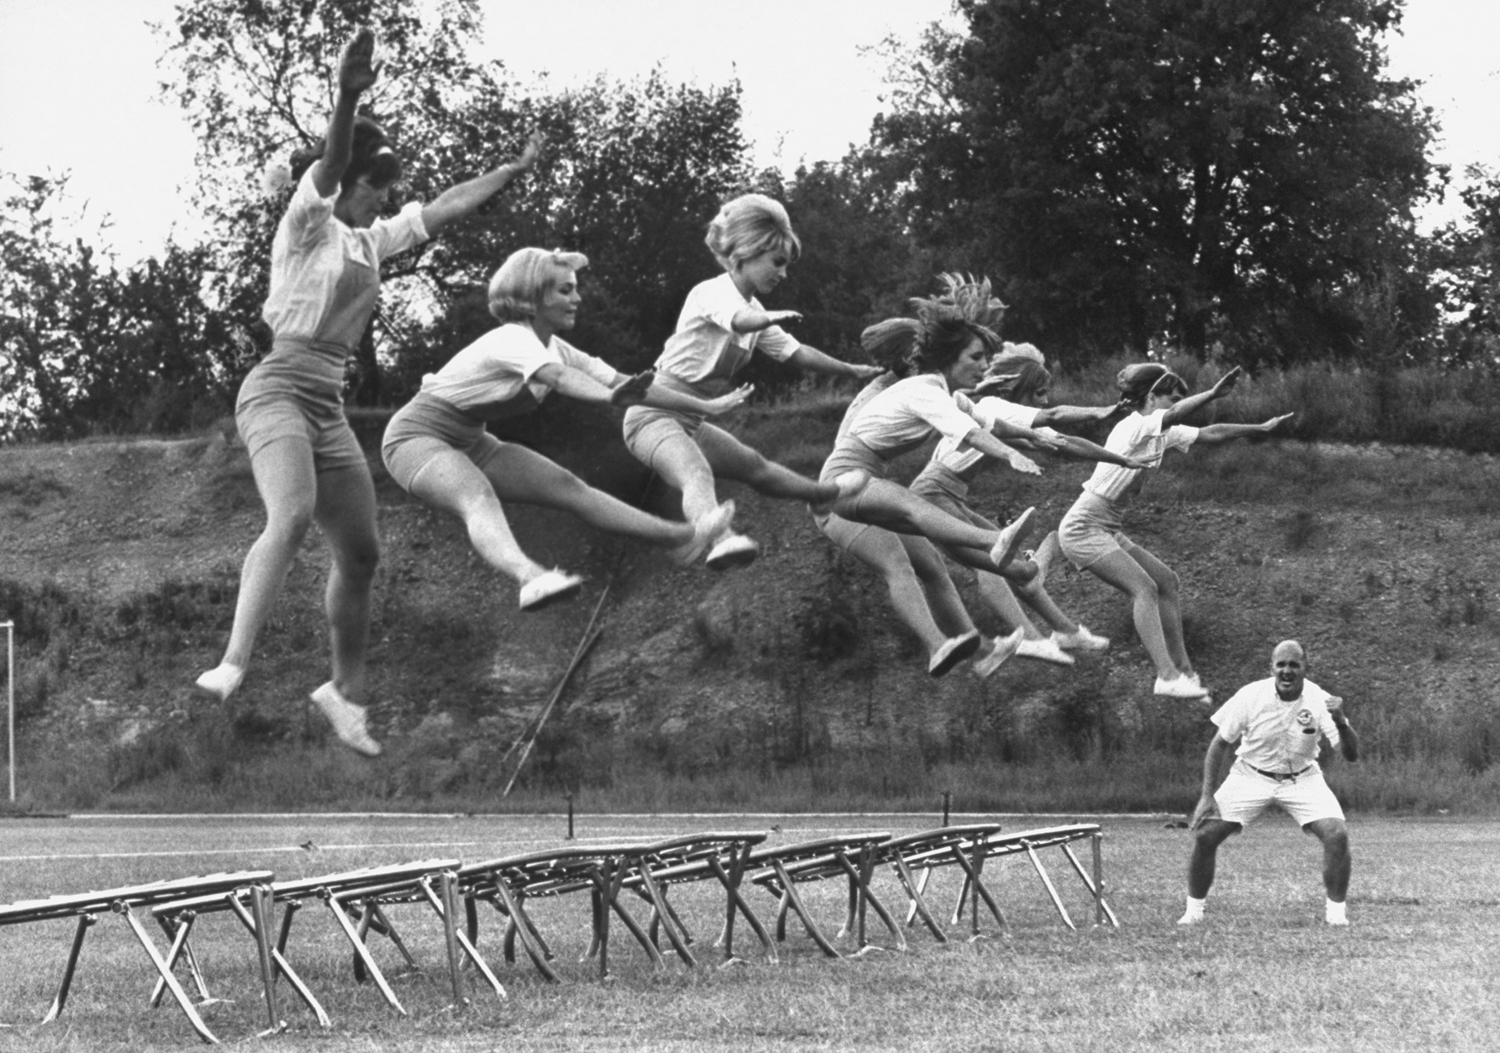 Cheerleader training under Bill Horan of the American Cheerleaders Association, Alabama, 1965. "Reach for the ripcord!" Horan bawls at his students.